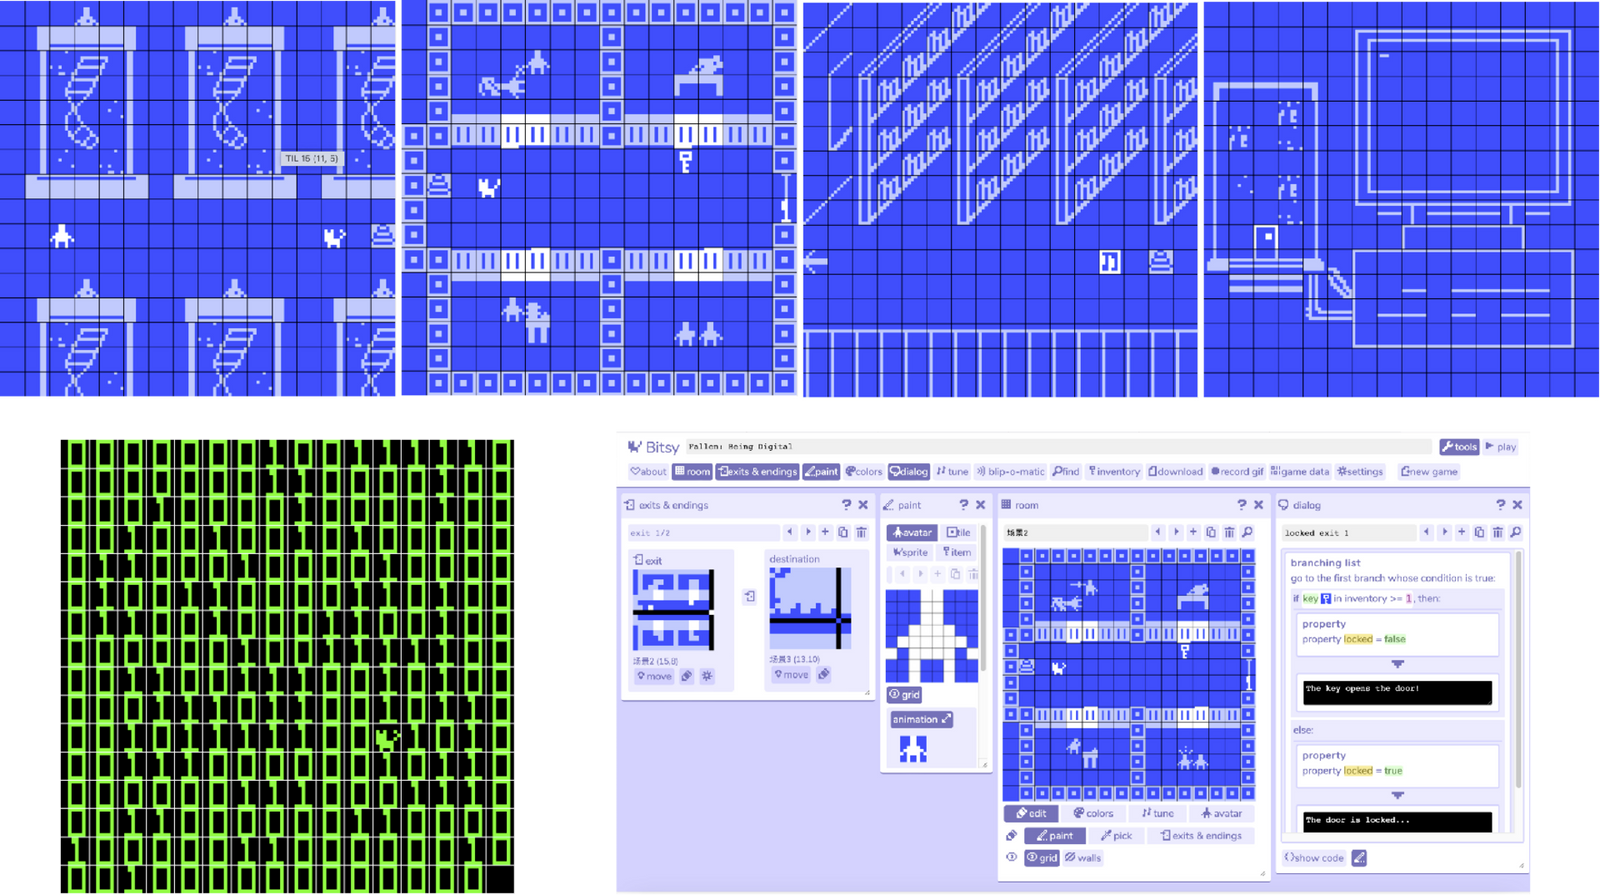 Pixel games - various screens of pixel games